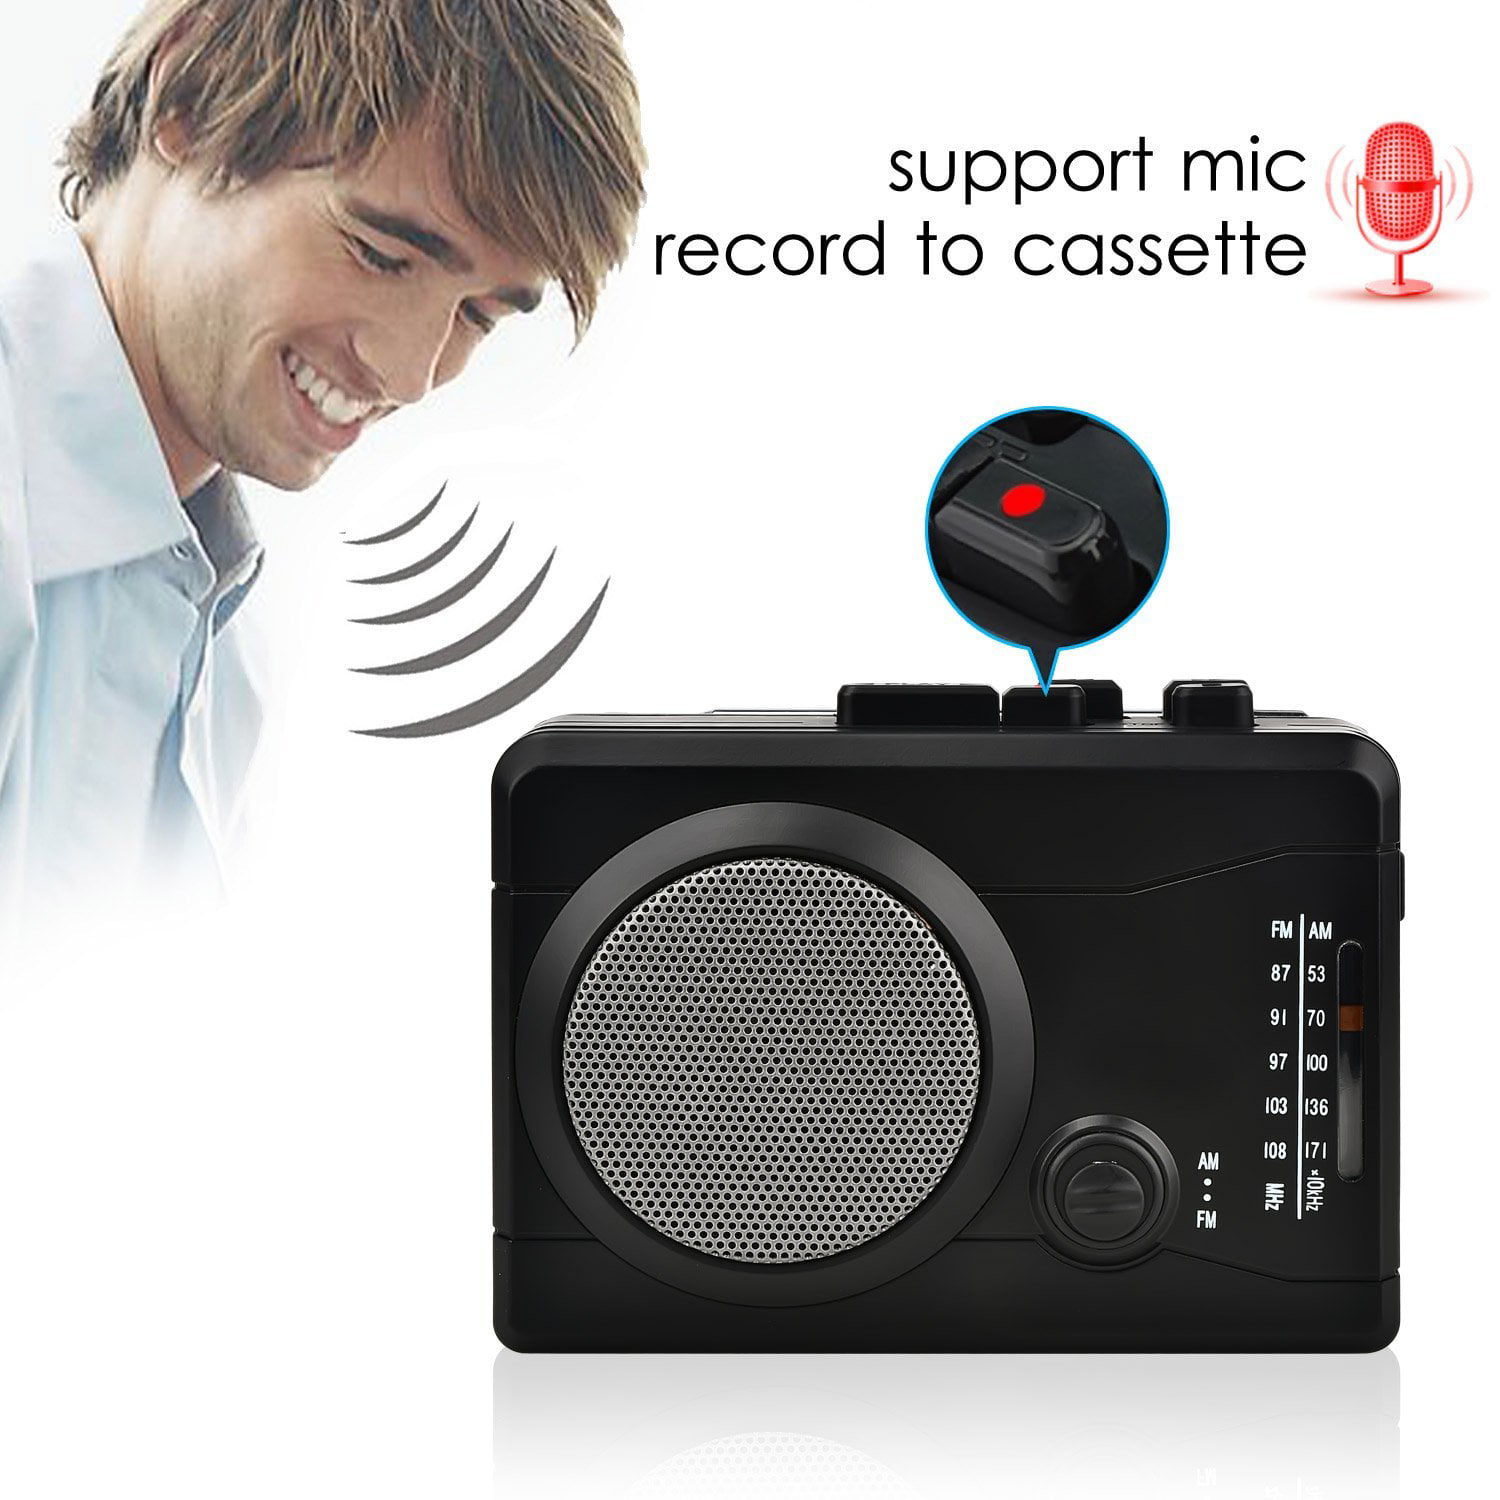 Portable Walkman Radio Cassette Tape Player Converter Recorder to Digital MP3 